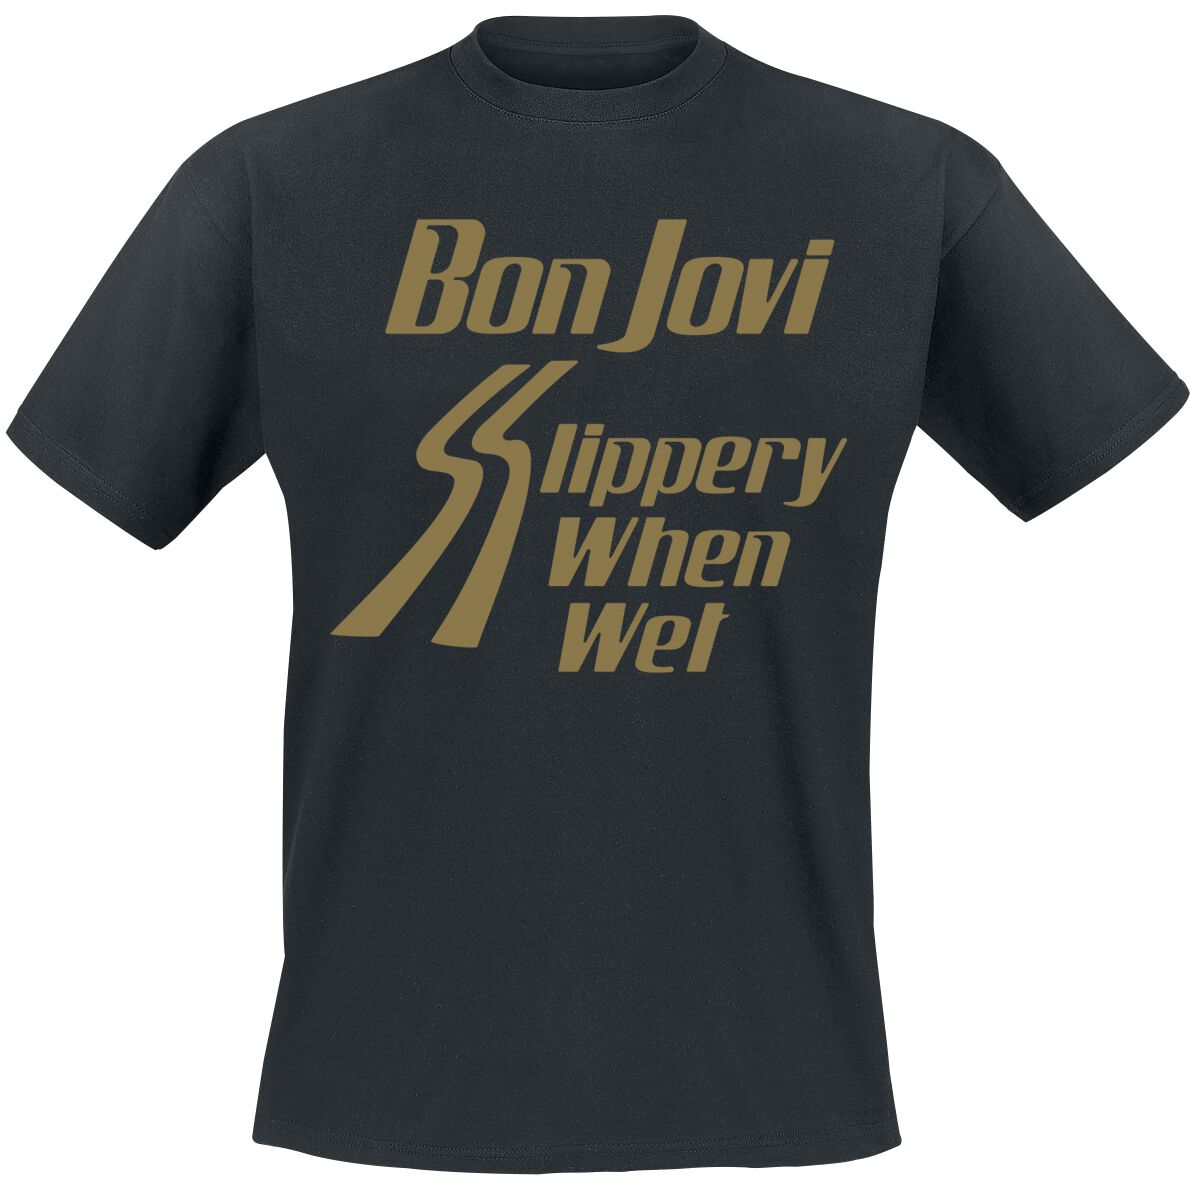 bon jovi t-shirt - slippery when wet - s bis 3xl - fÃ¼r mÃ¤nner - grÃ¶ÃŸe xl - - lizenziertes merchandise! schwarz